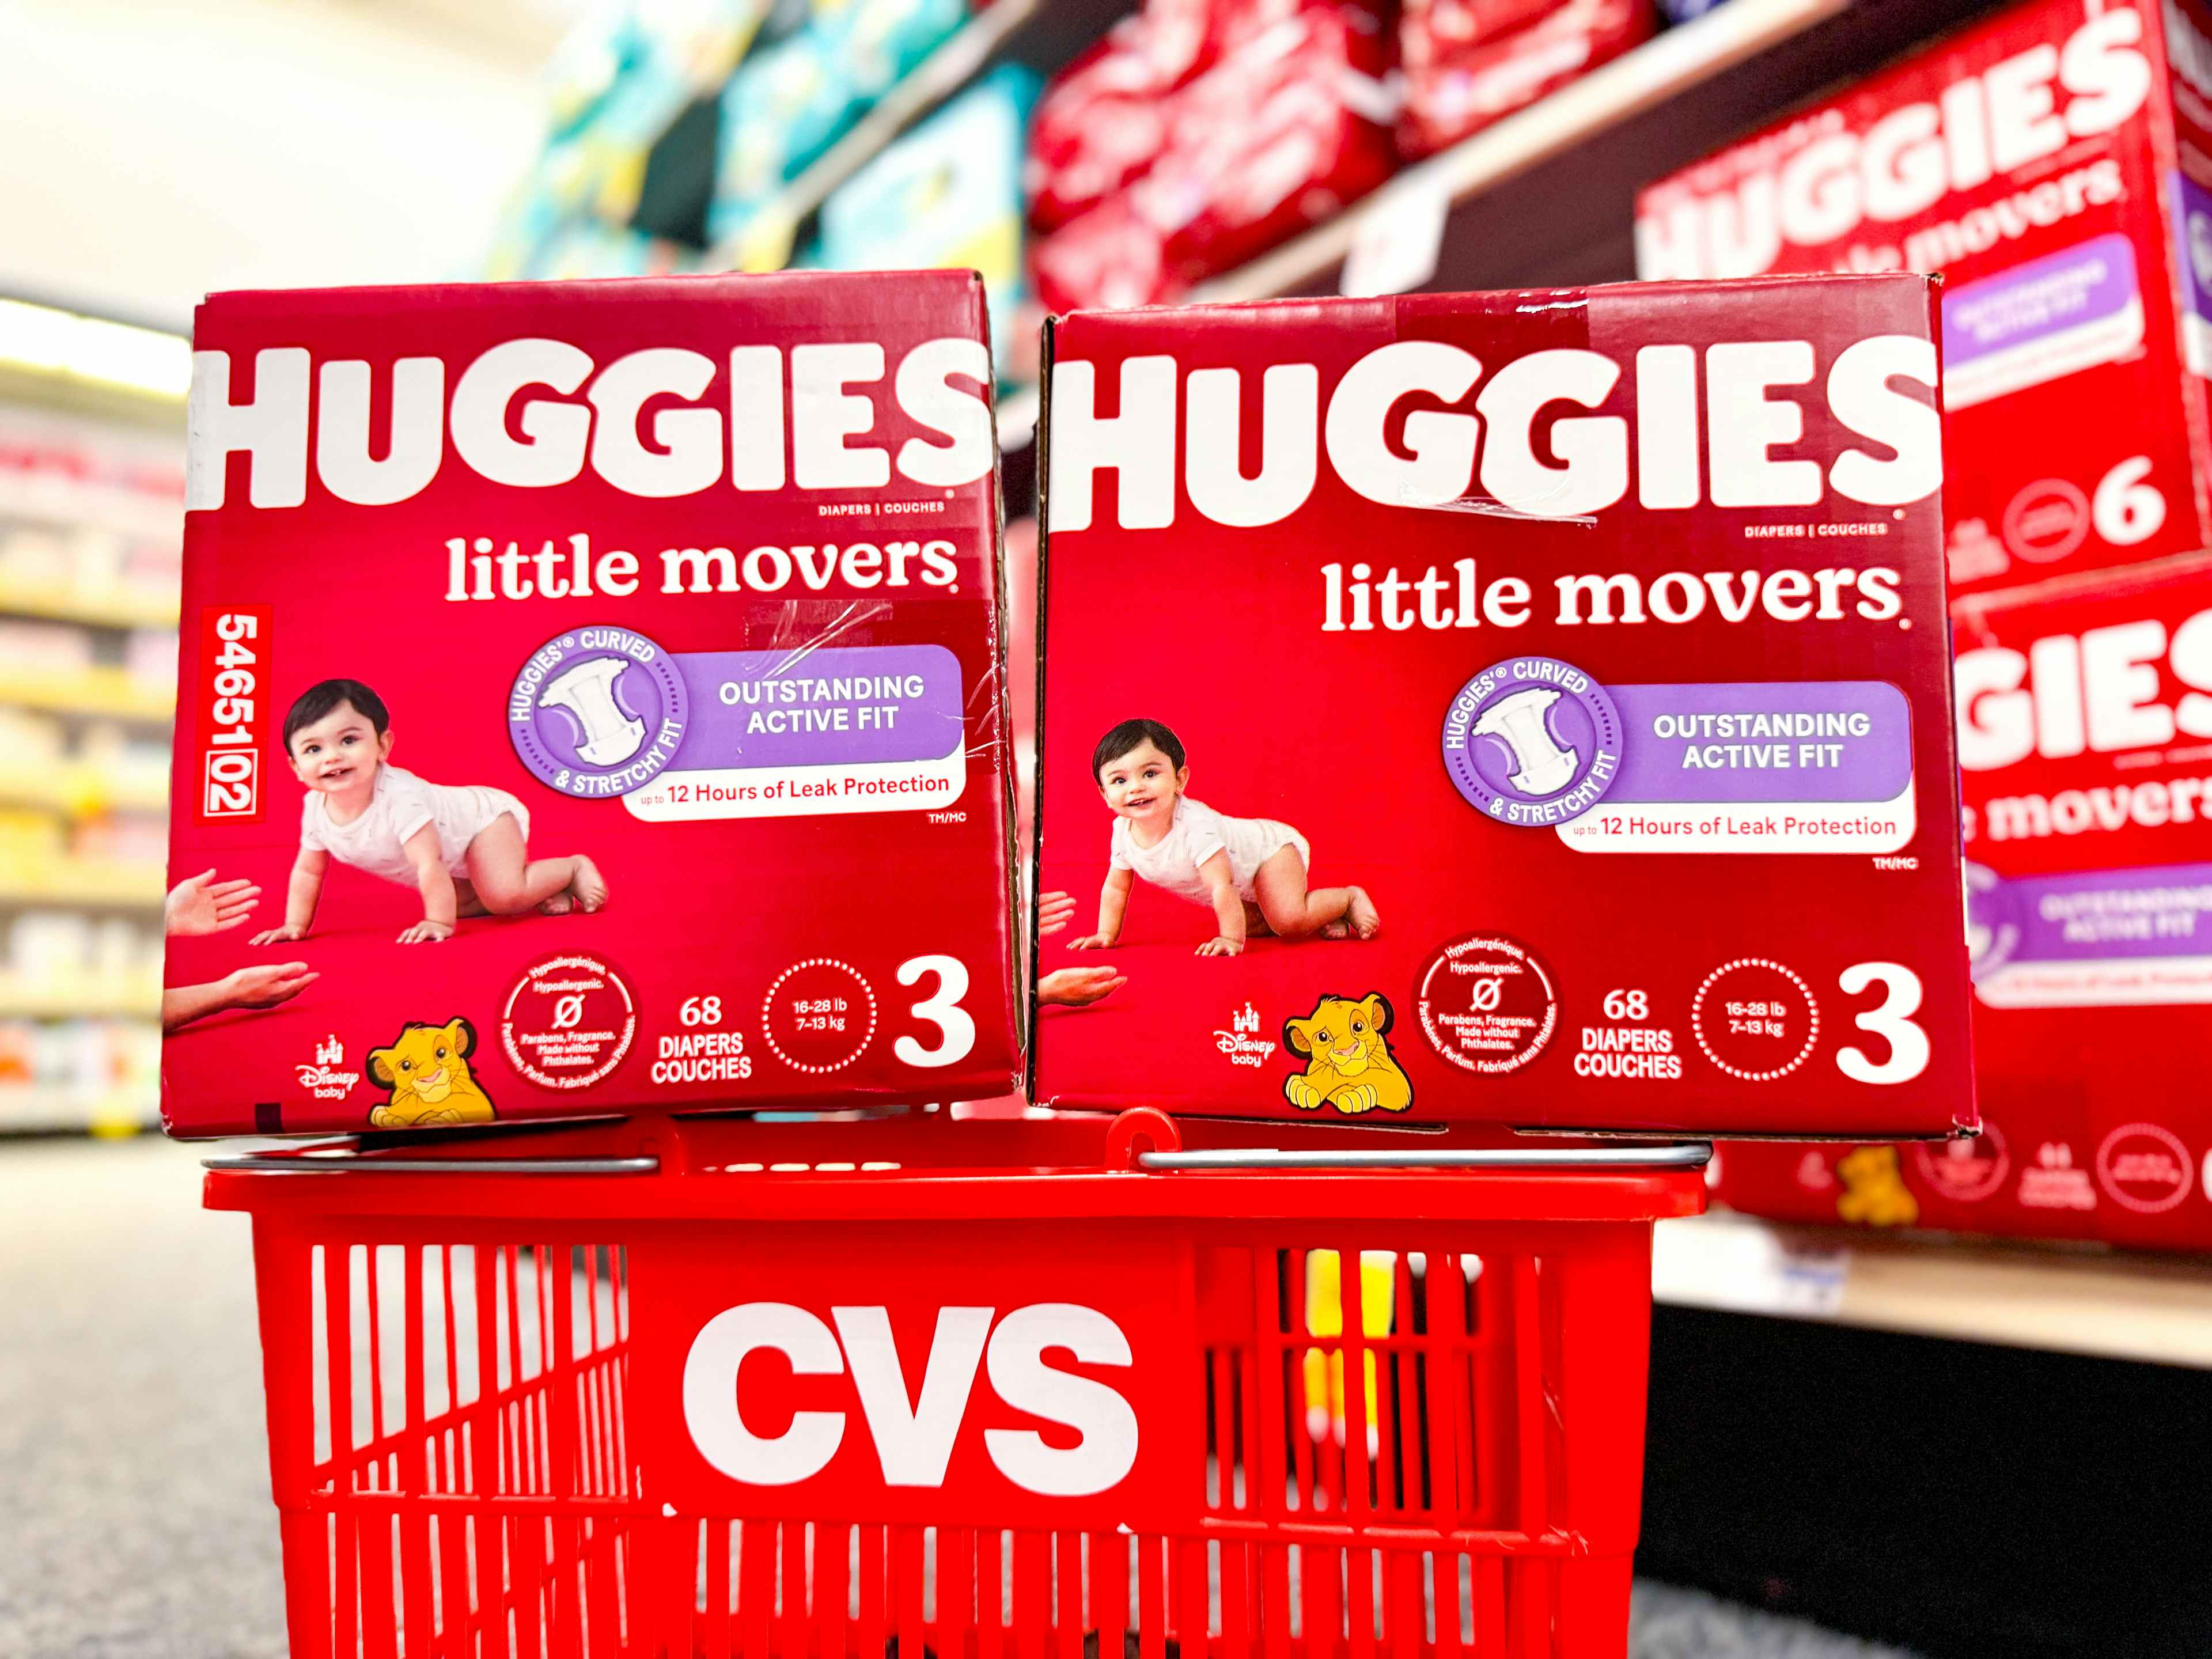 huggies little movers diapers cvs.jpg2